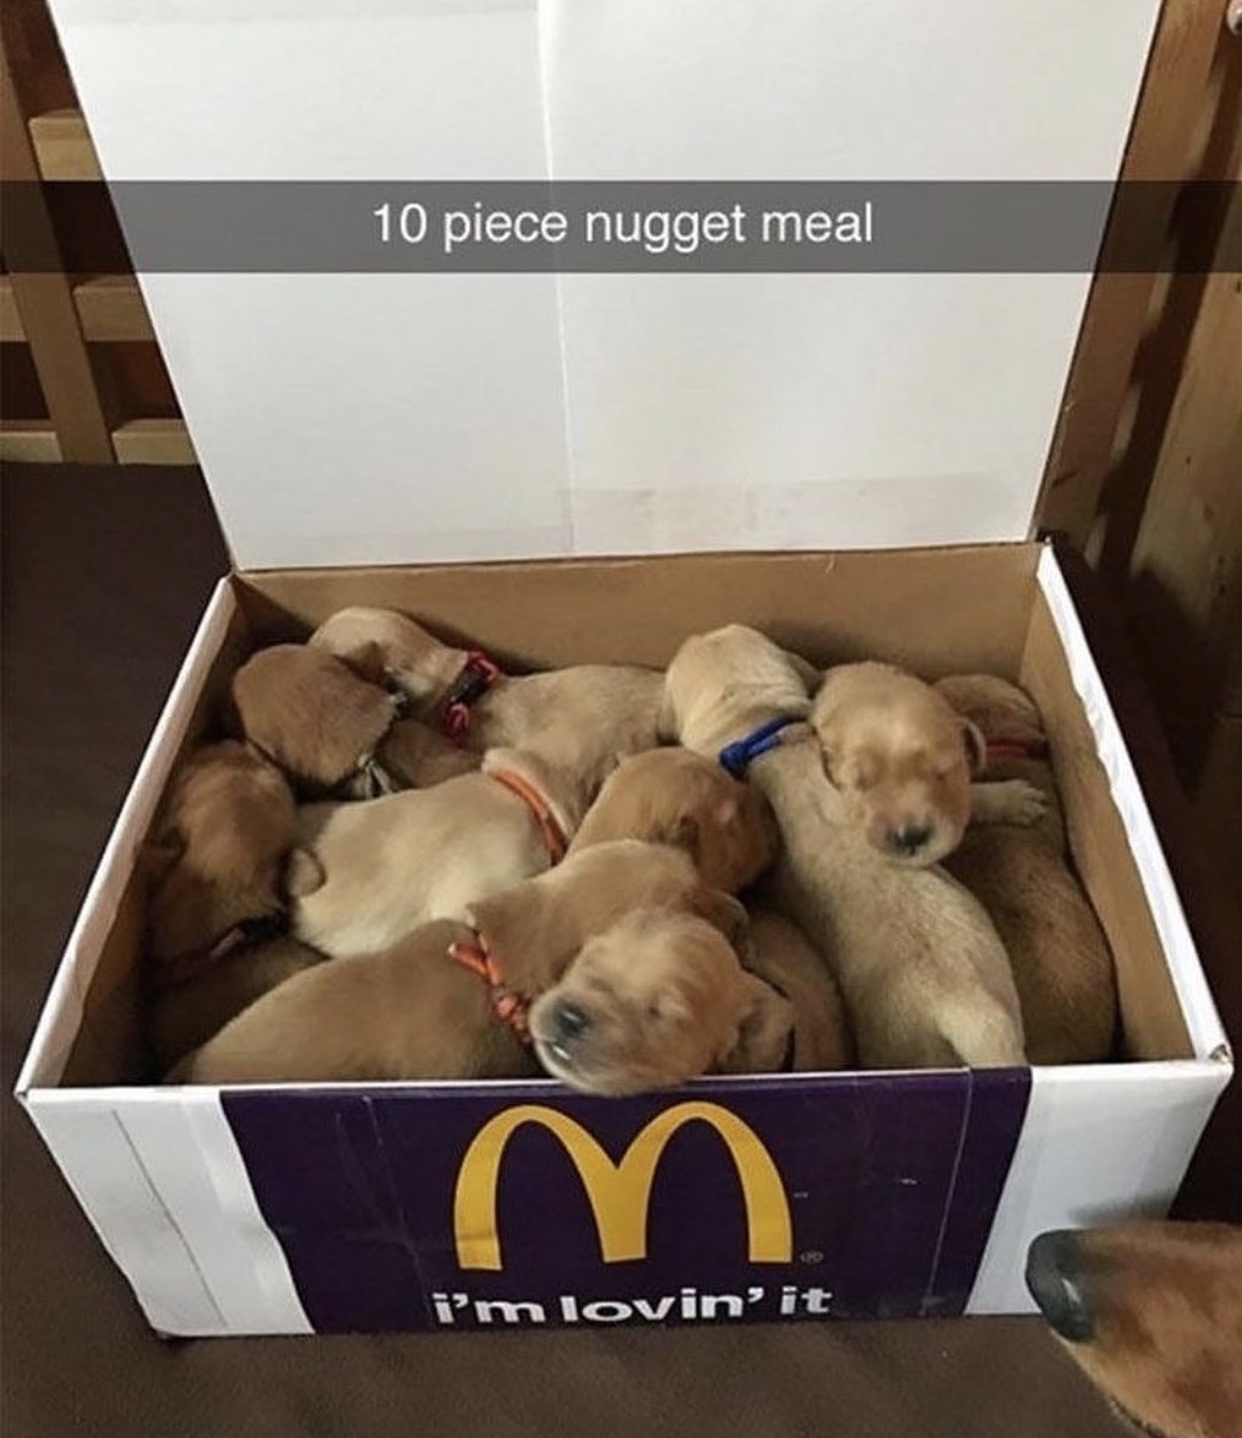 10 piece nugget puppies - 10 piece nugget meal i'm lovin' it